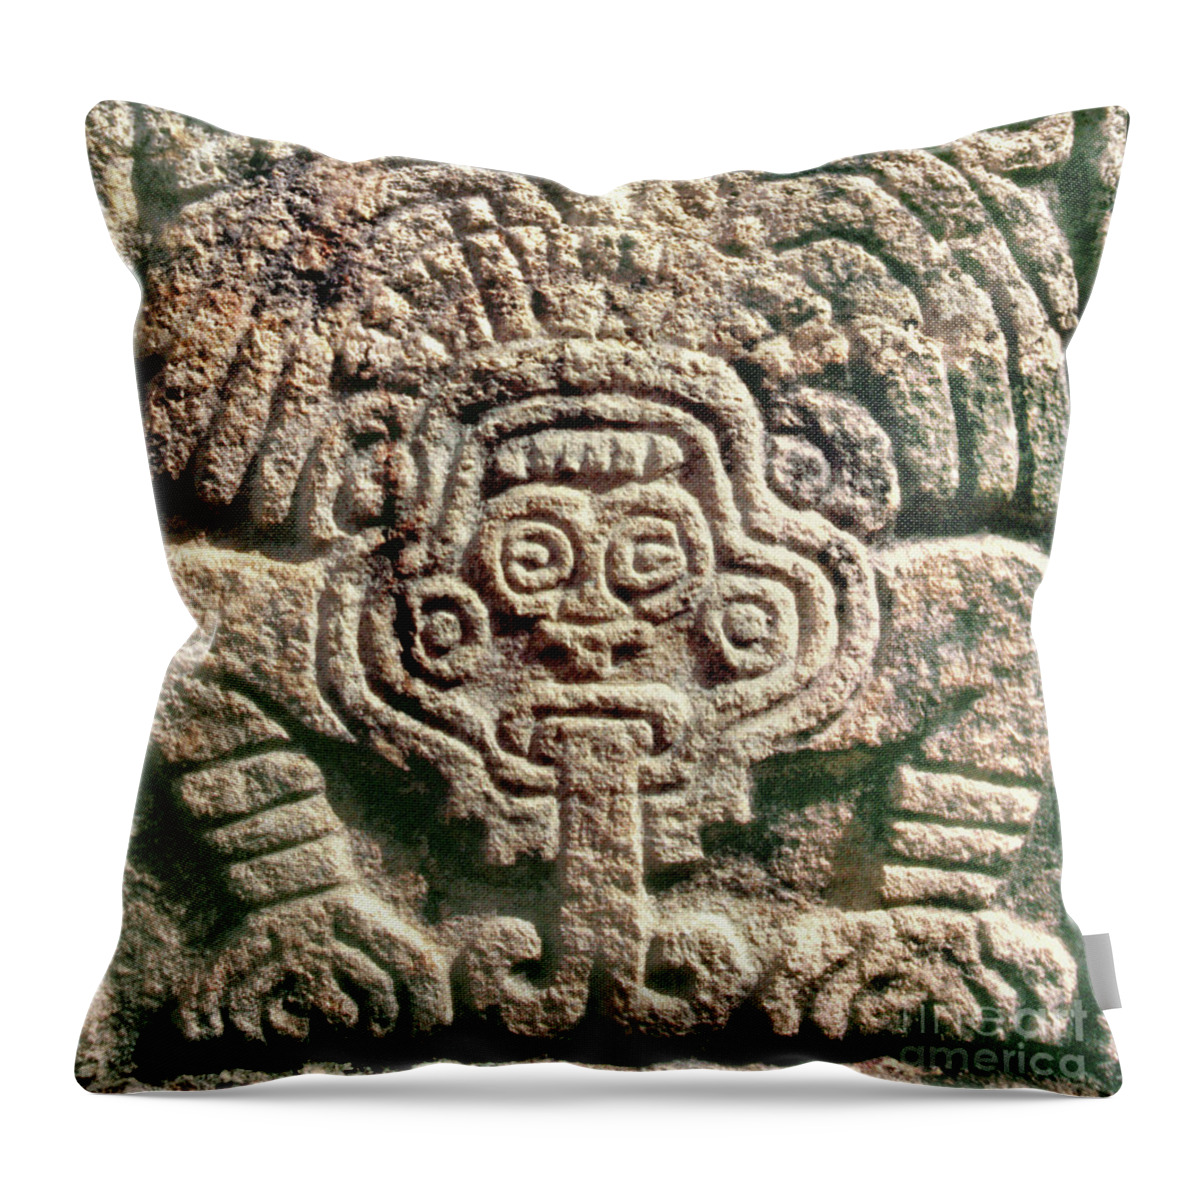 Chichen Itza Throw Pillow featuring the photograph Chichen Itza relief art prints - Serpent Bird by Sharon Hudson